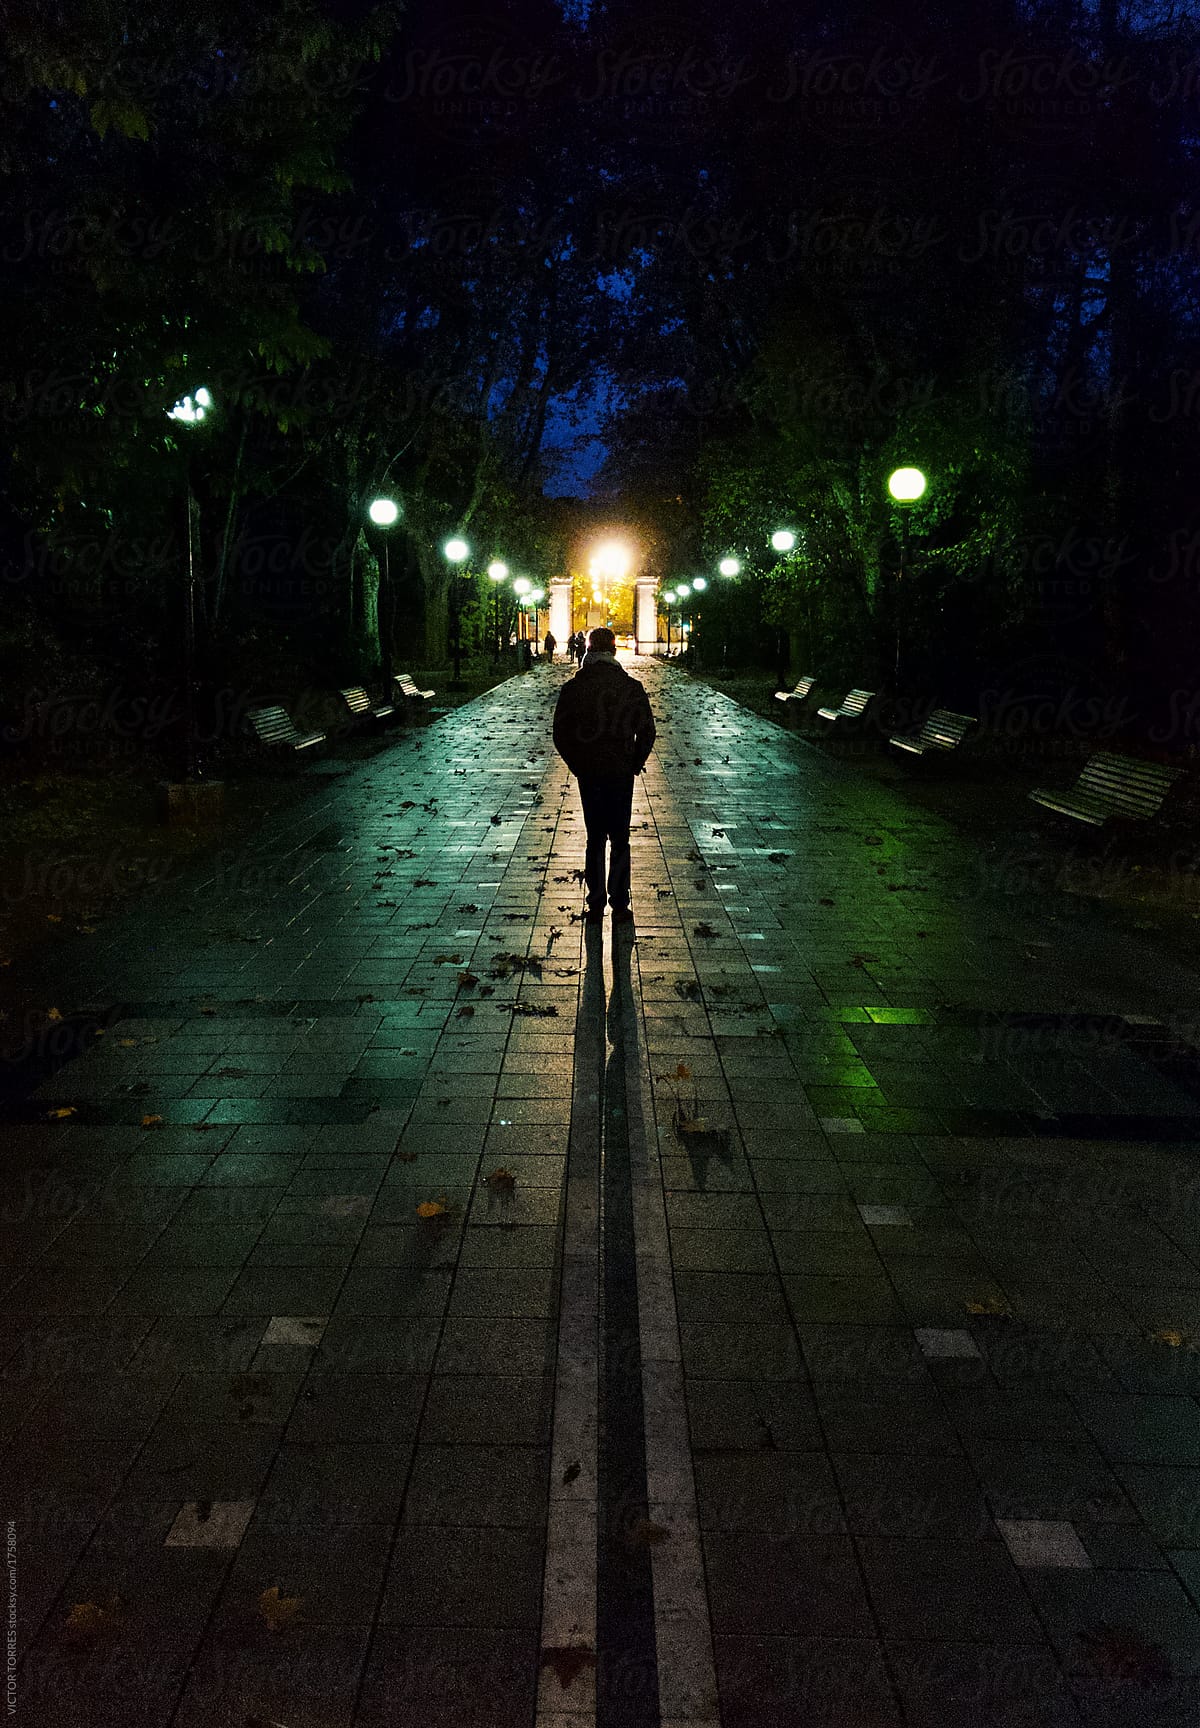 Man Walking Alone Throug A Dark Street At Night | Stocksy ...